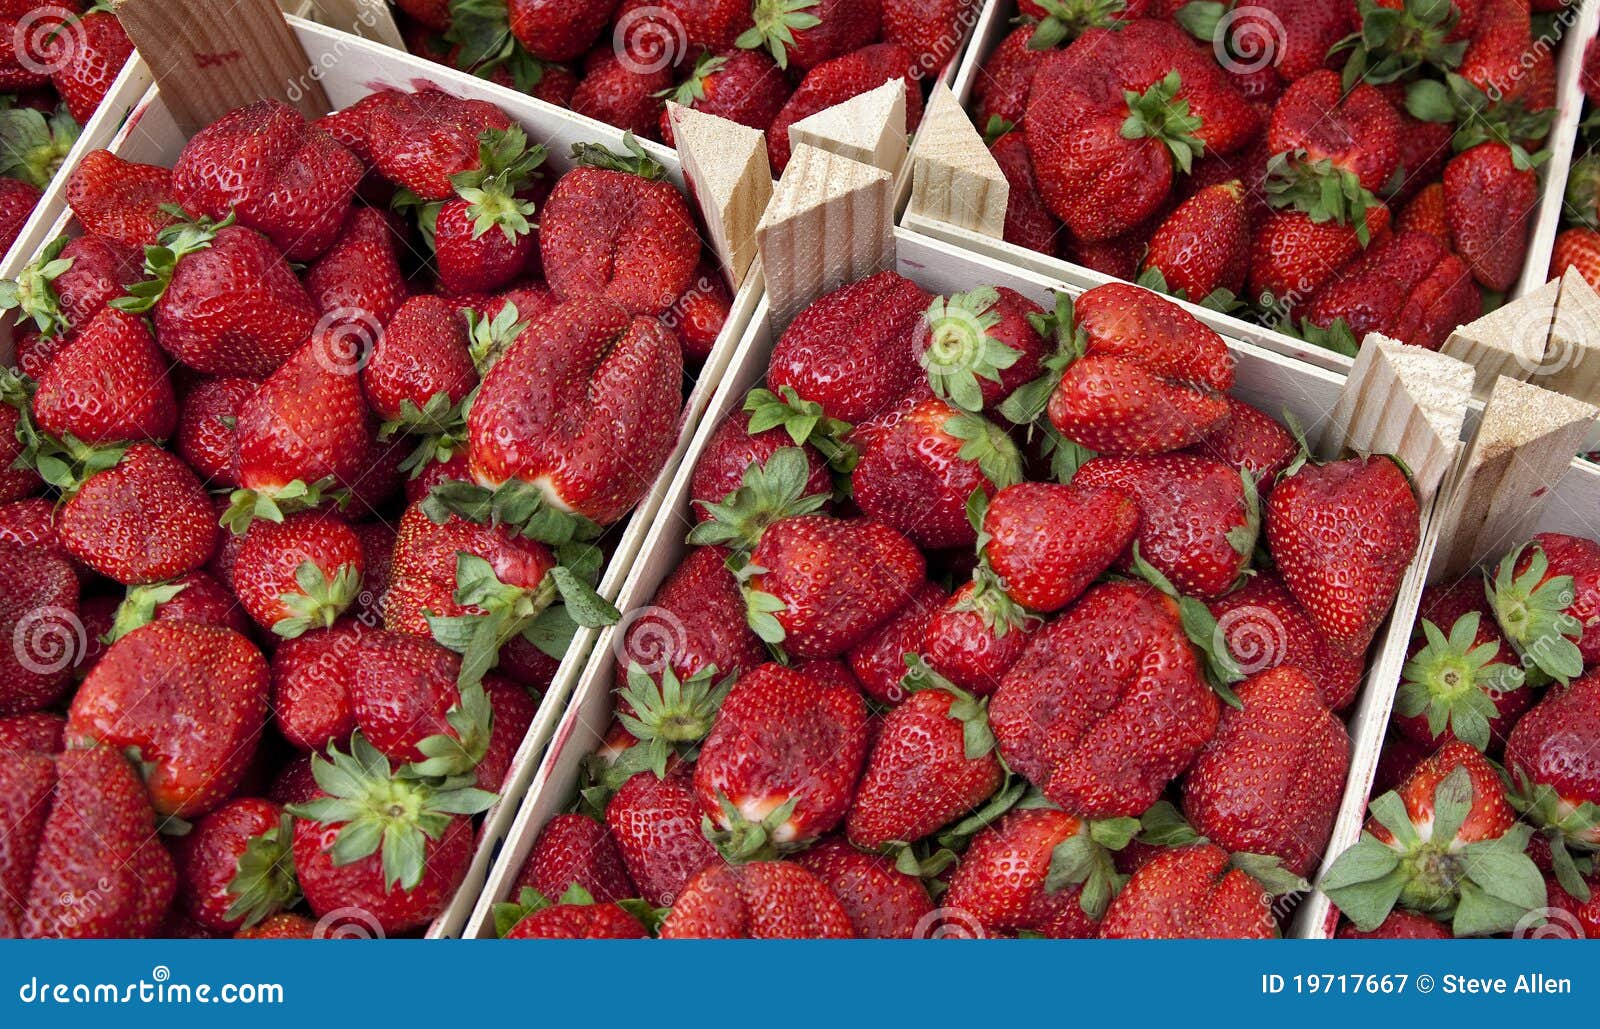 fruit - strawberries